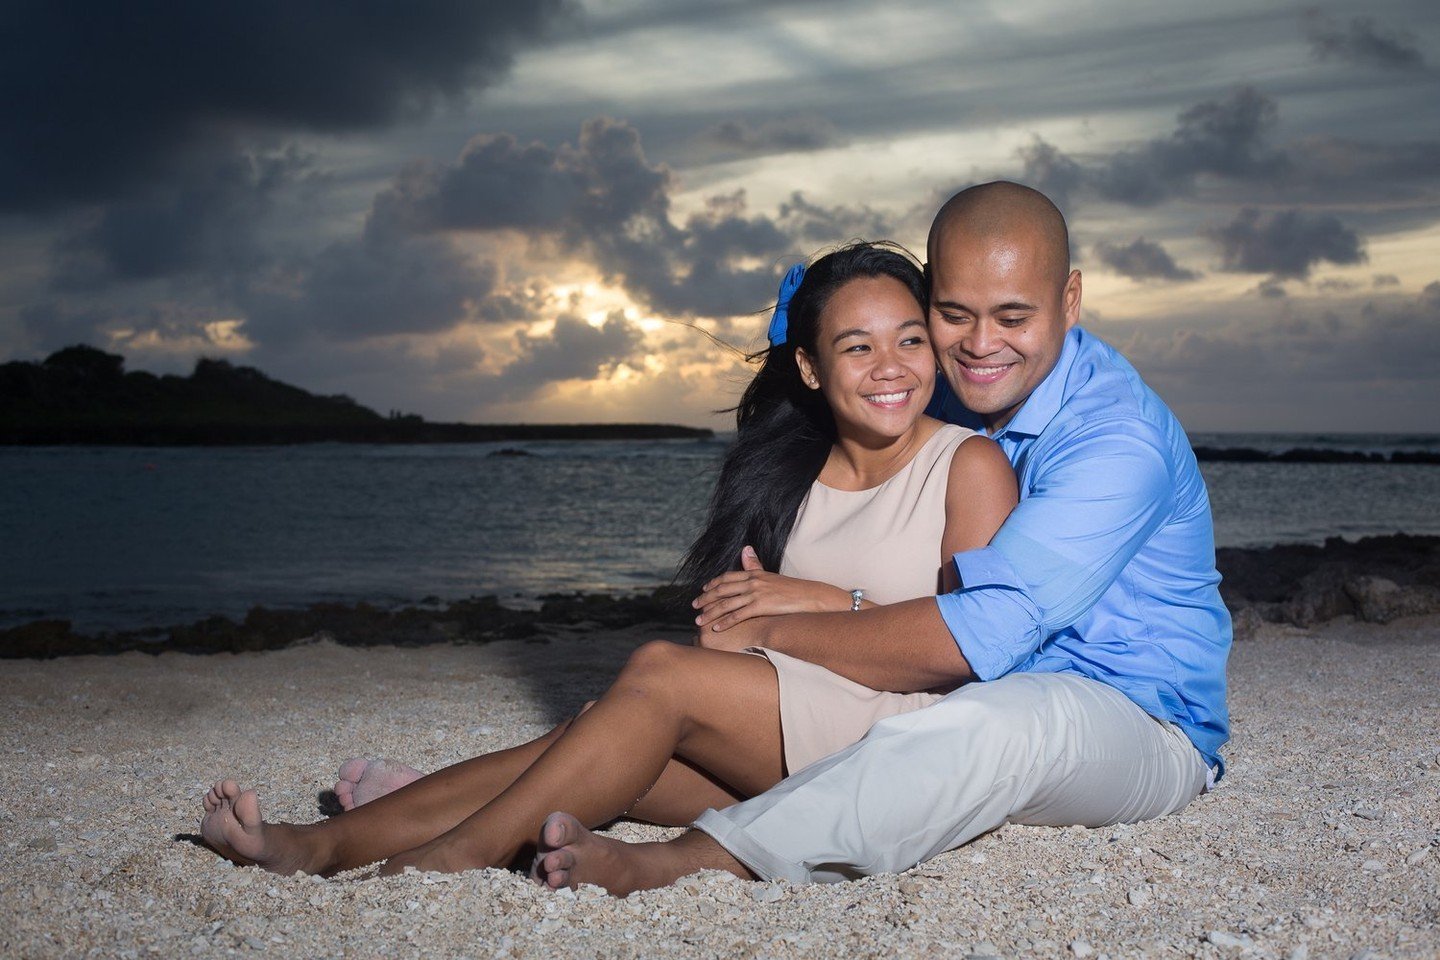 Eternal Radiance: Eli and Dhana's Sunset Engagement
Read More: https://www.jolenekaneshige.com/blog/eternal-radiance-eli-and-dhanas-sunset-engagement 

#DestinationWedding #HawaiiWedding #HawaiiPhotography #BeachWedding #IslandWedding #ParadiseWeddin